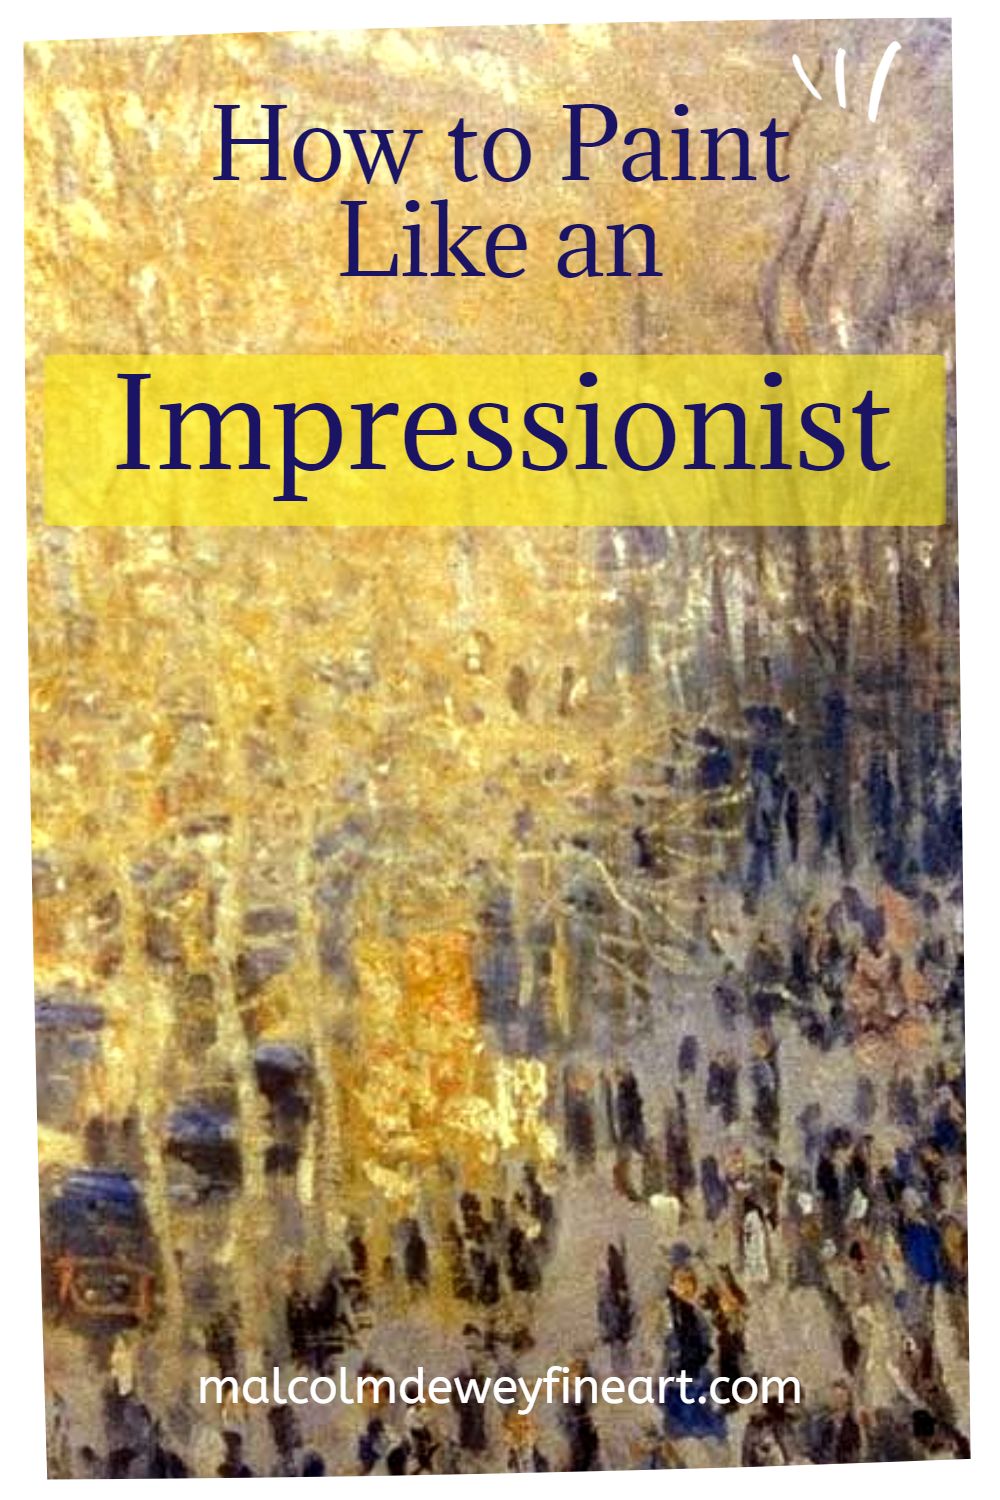 How to Paint Like an Impressionist